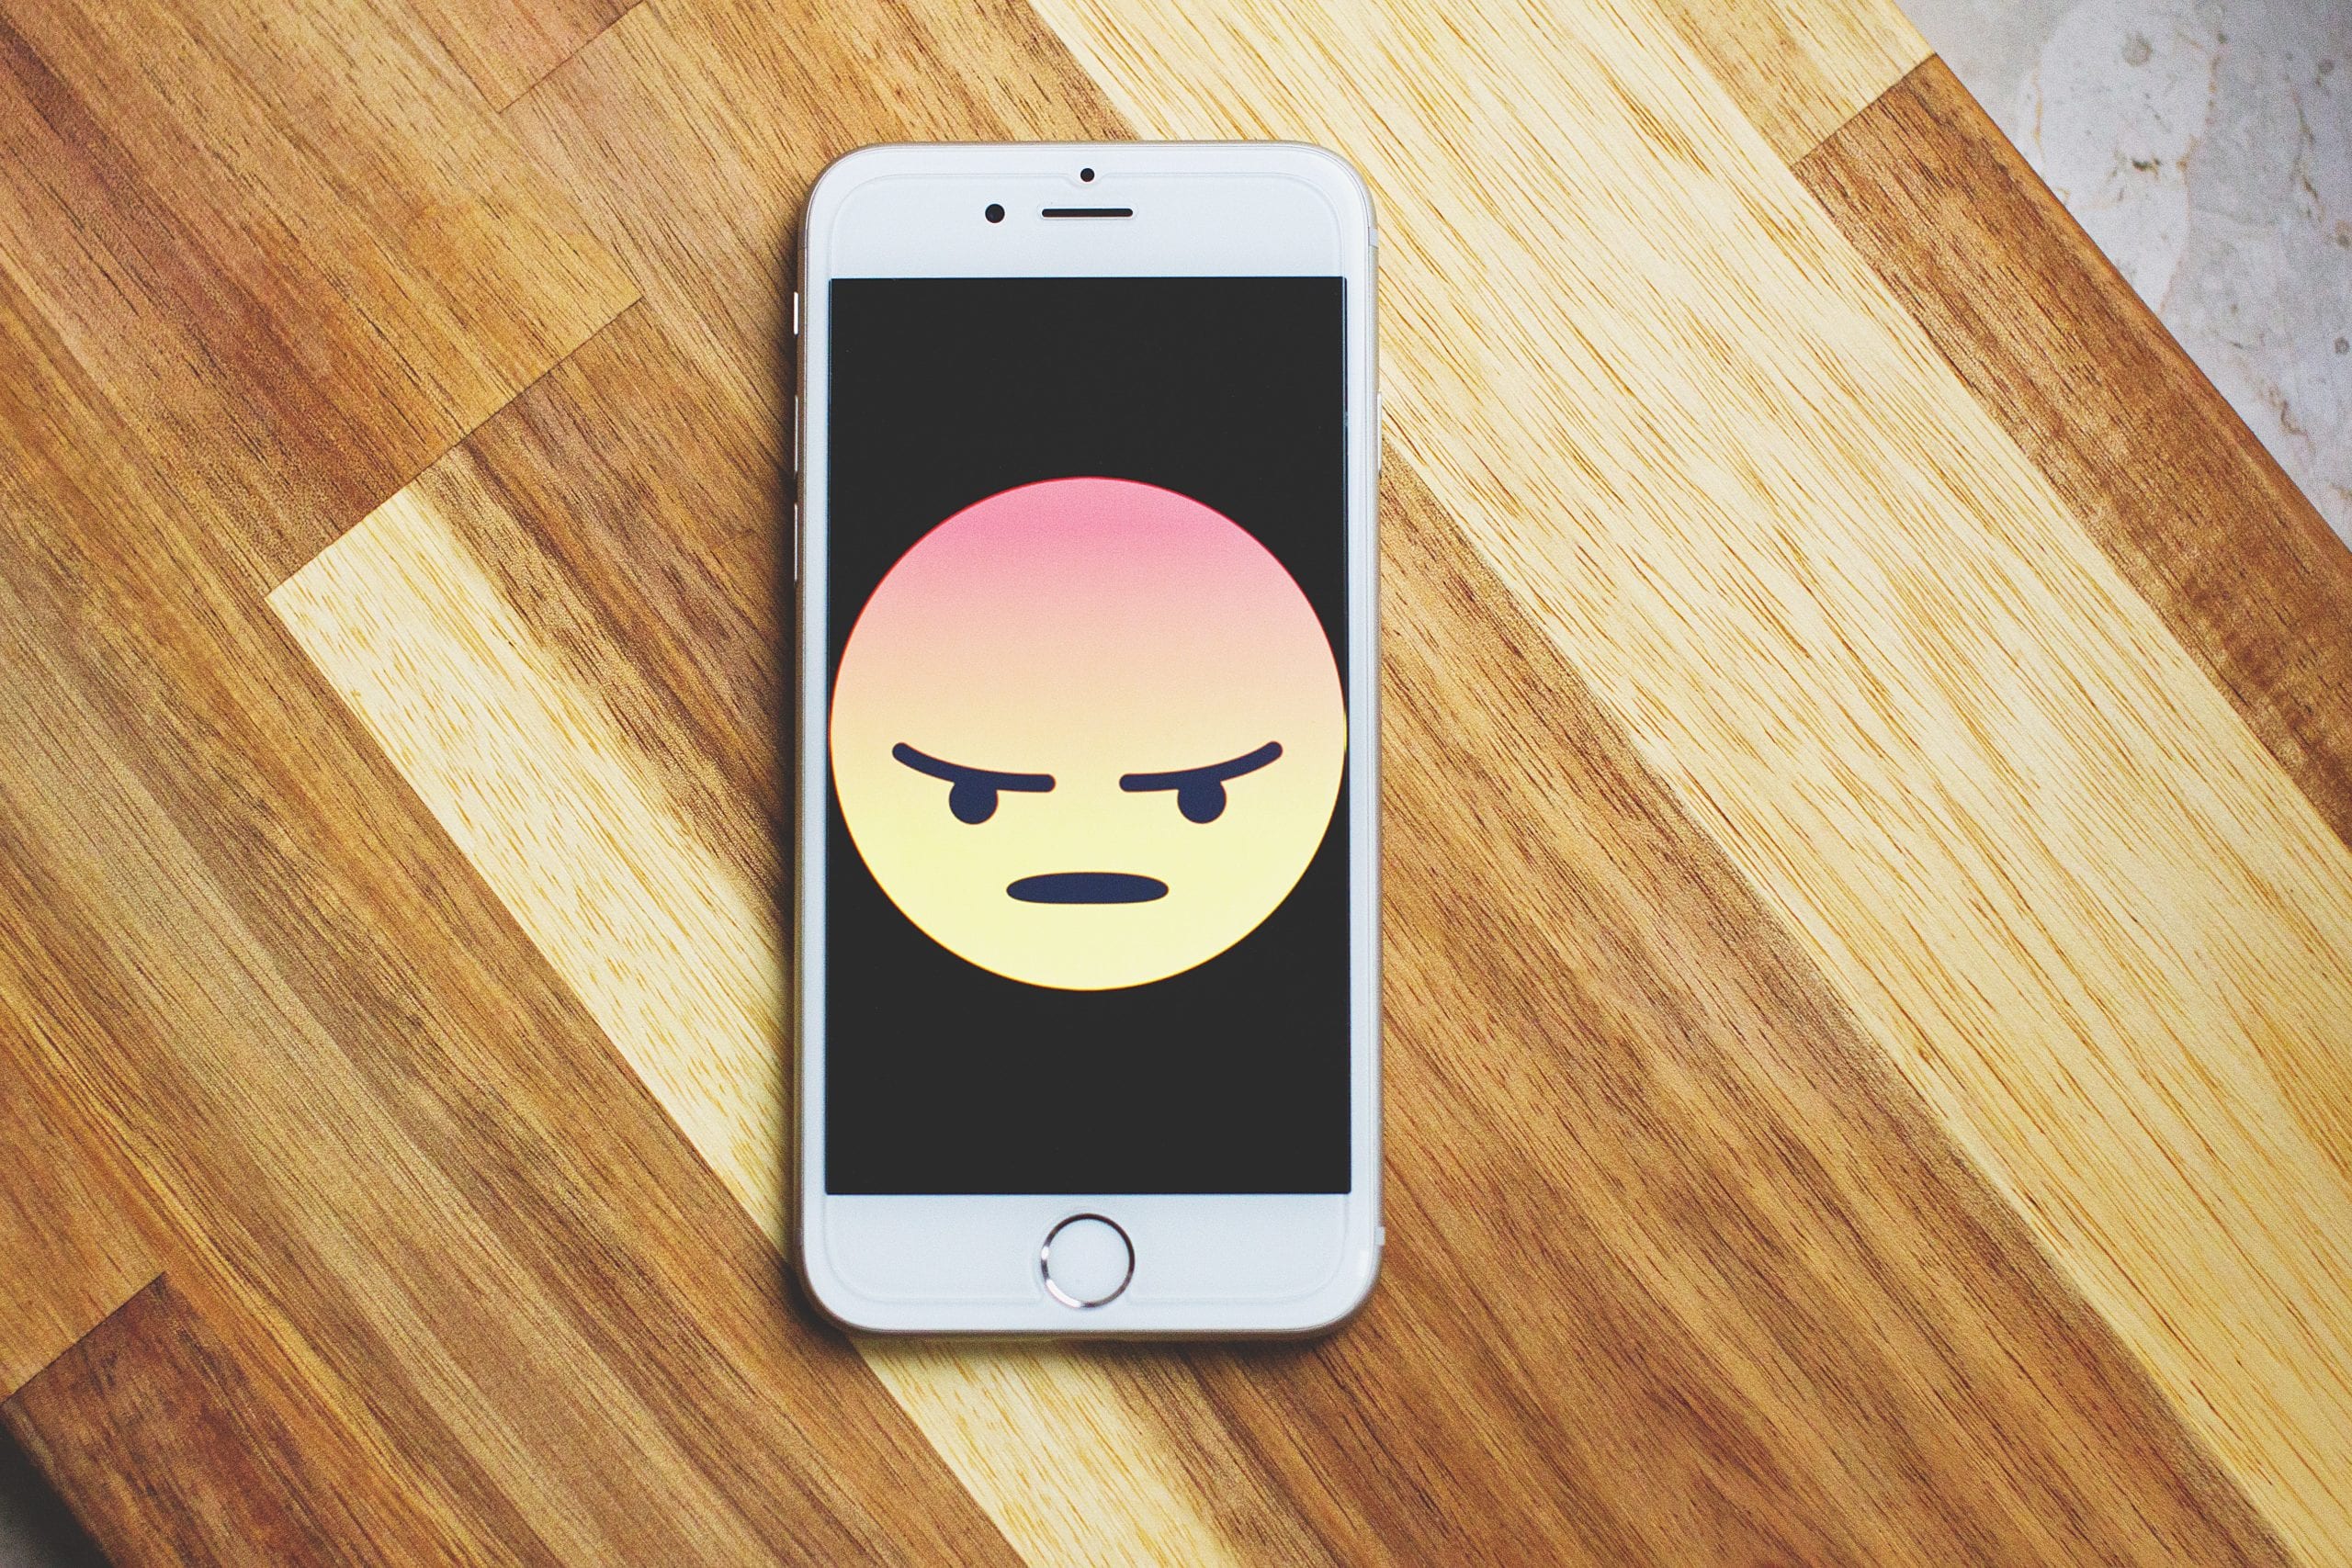 Angry emoji displayed on a phone